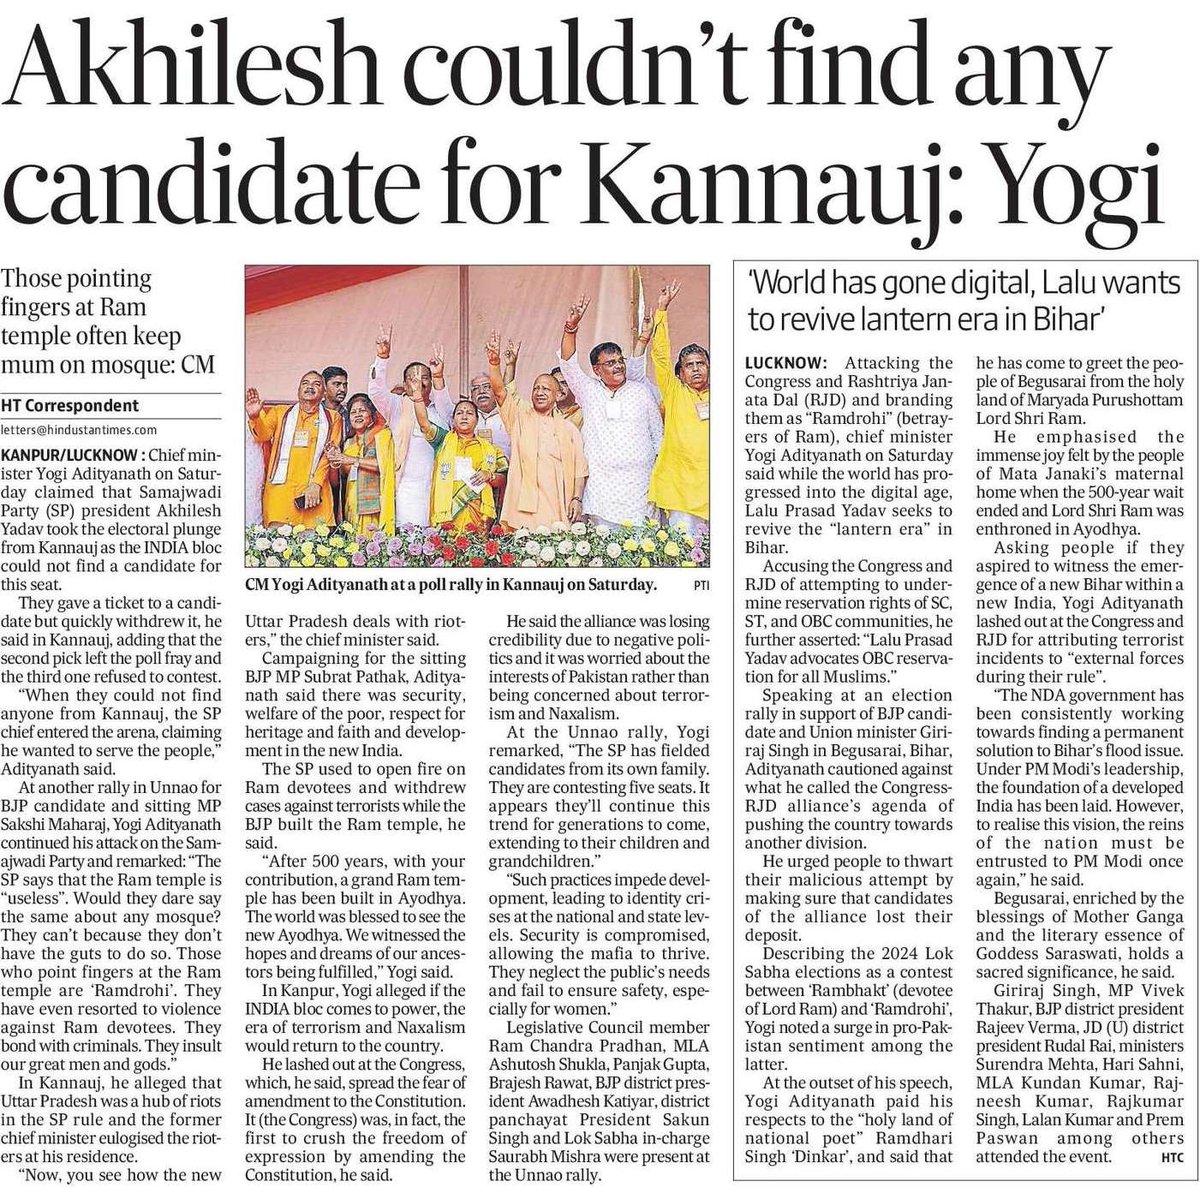 Akhilesh couldn't find any candidate for Kannauj: CM Shri @myogiadityanath Ji Maharaj 'World has gone digital, Lalu wants to revive lantern era in Bihar'